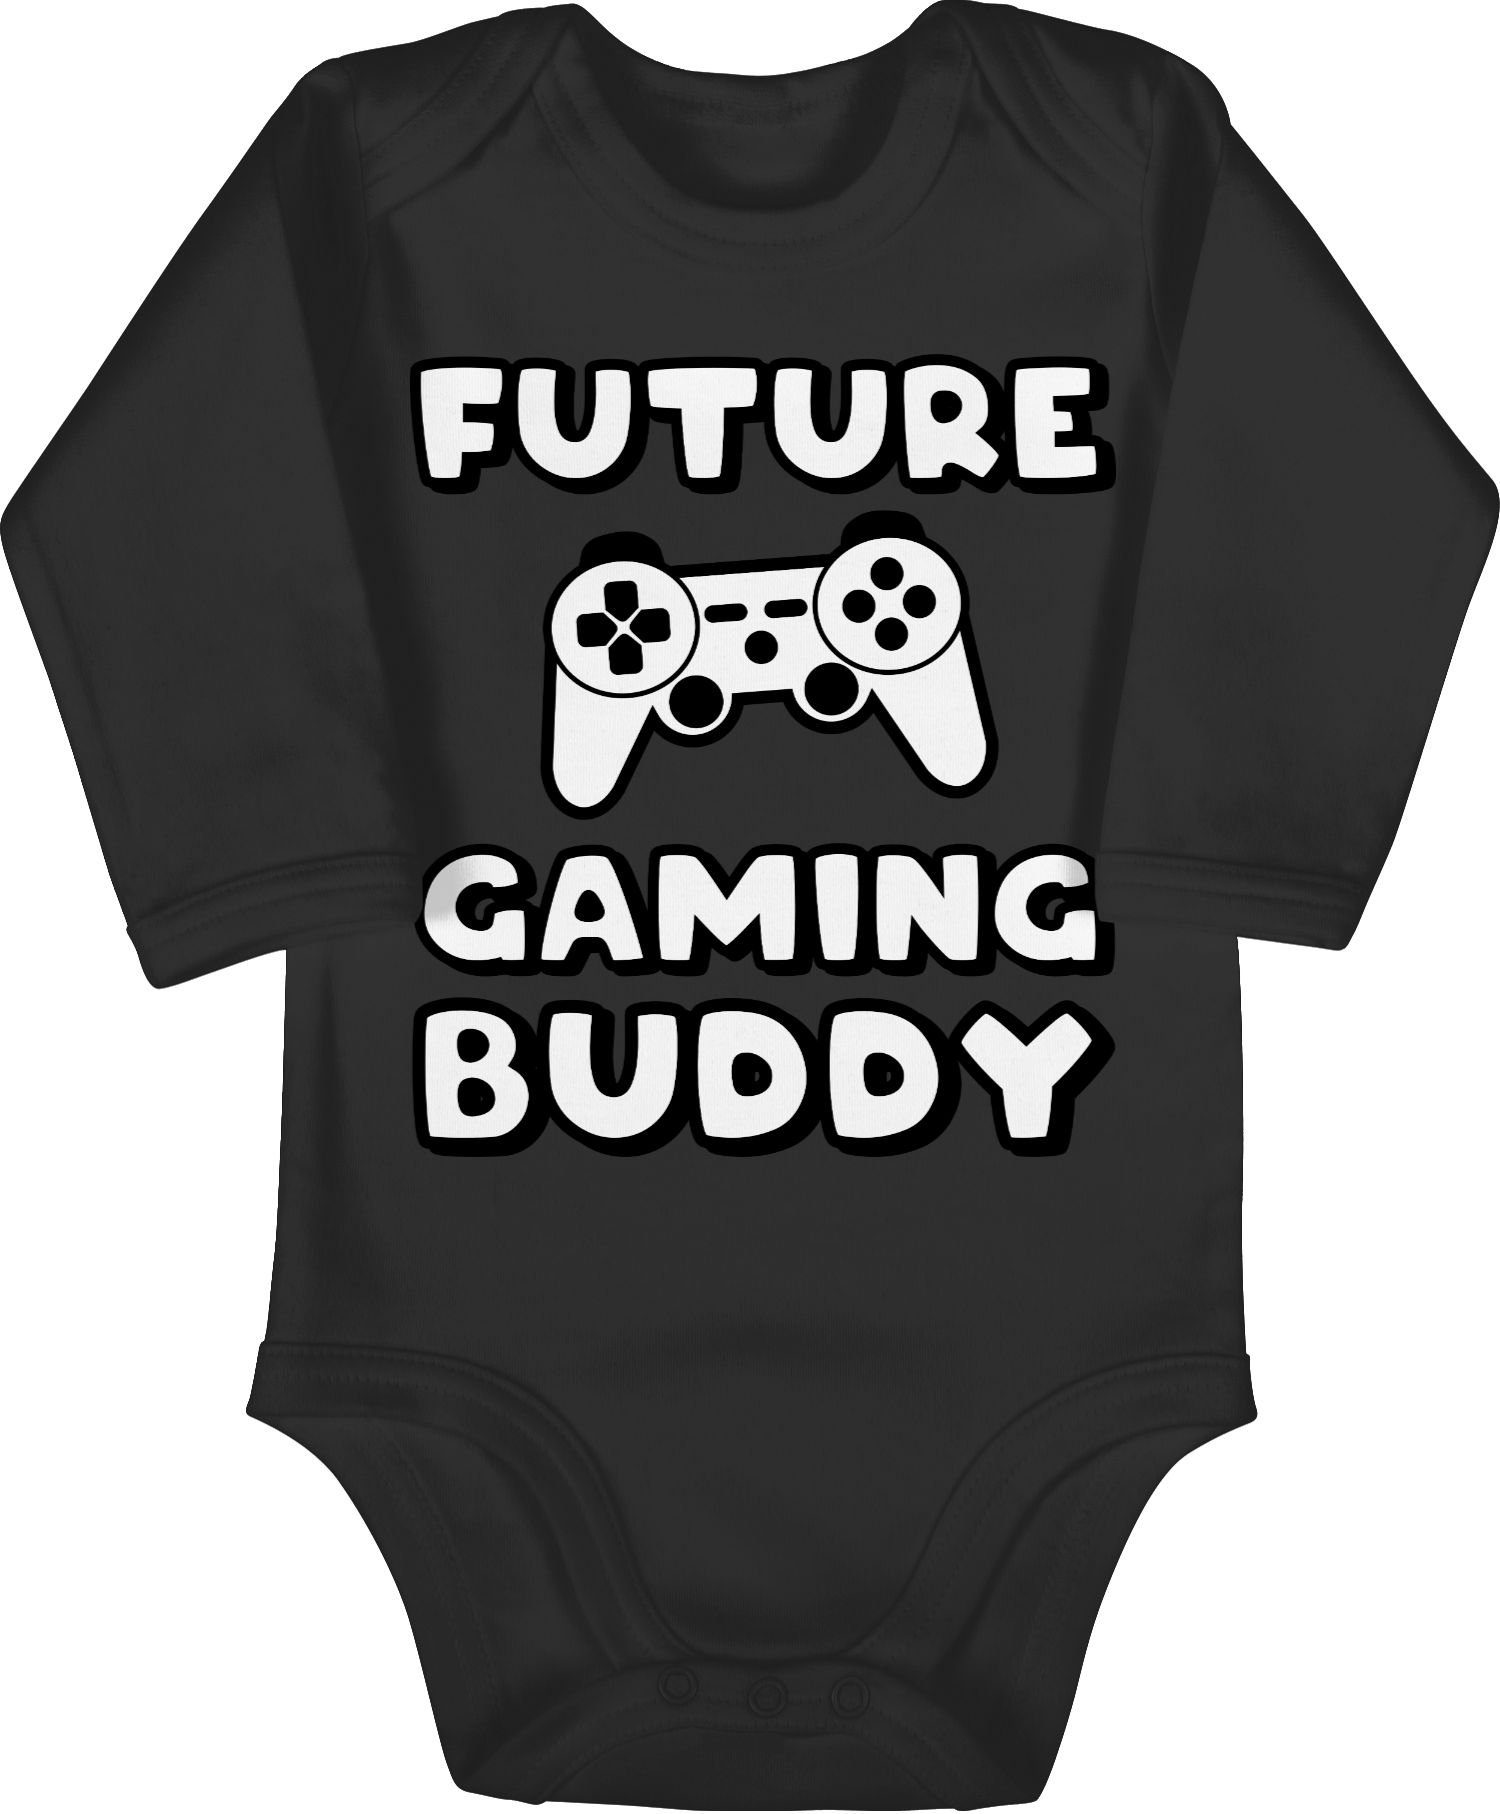 Buddy Schwarz Shirtbody Gaming Baby Future Shirtracer Sprüche 1